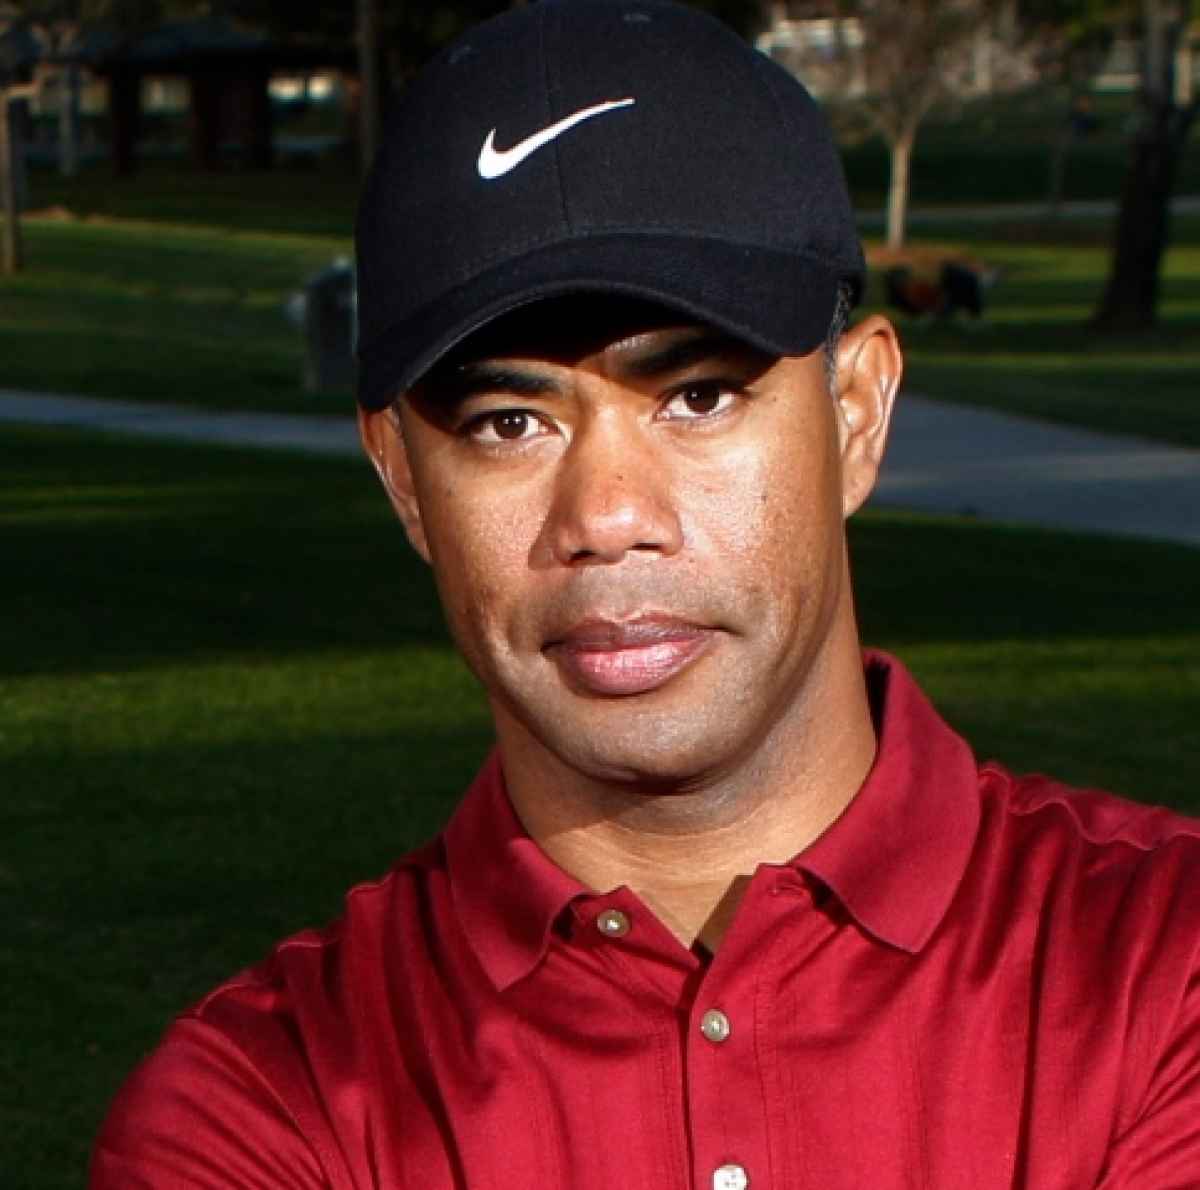 Tiger Woods impersonator arrested for sexting harassment GolfMagic photo